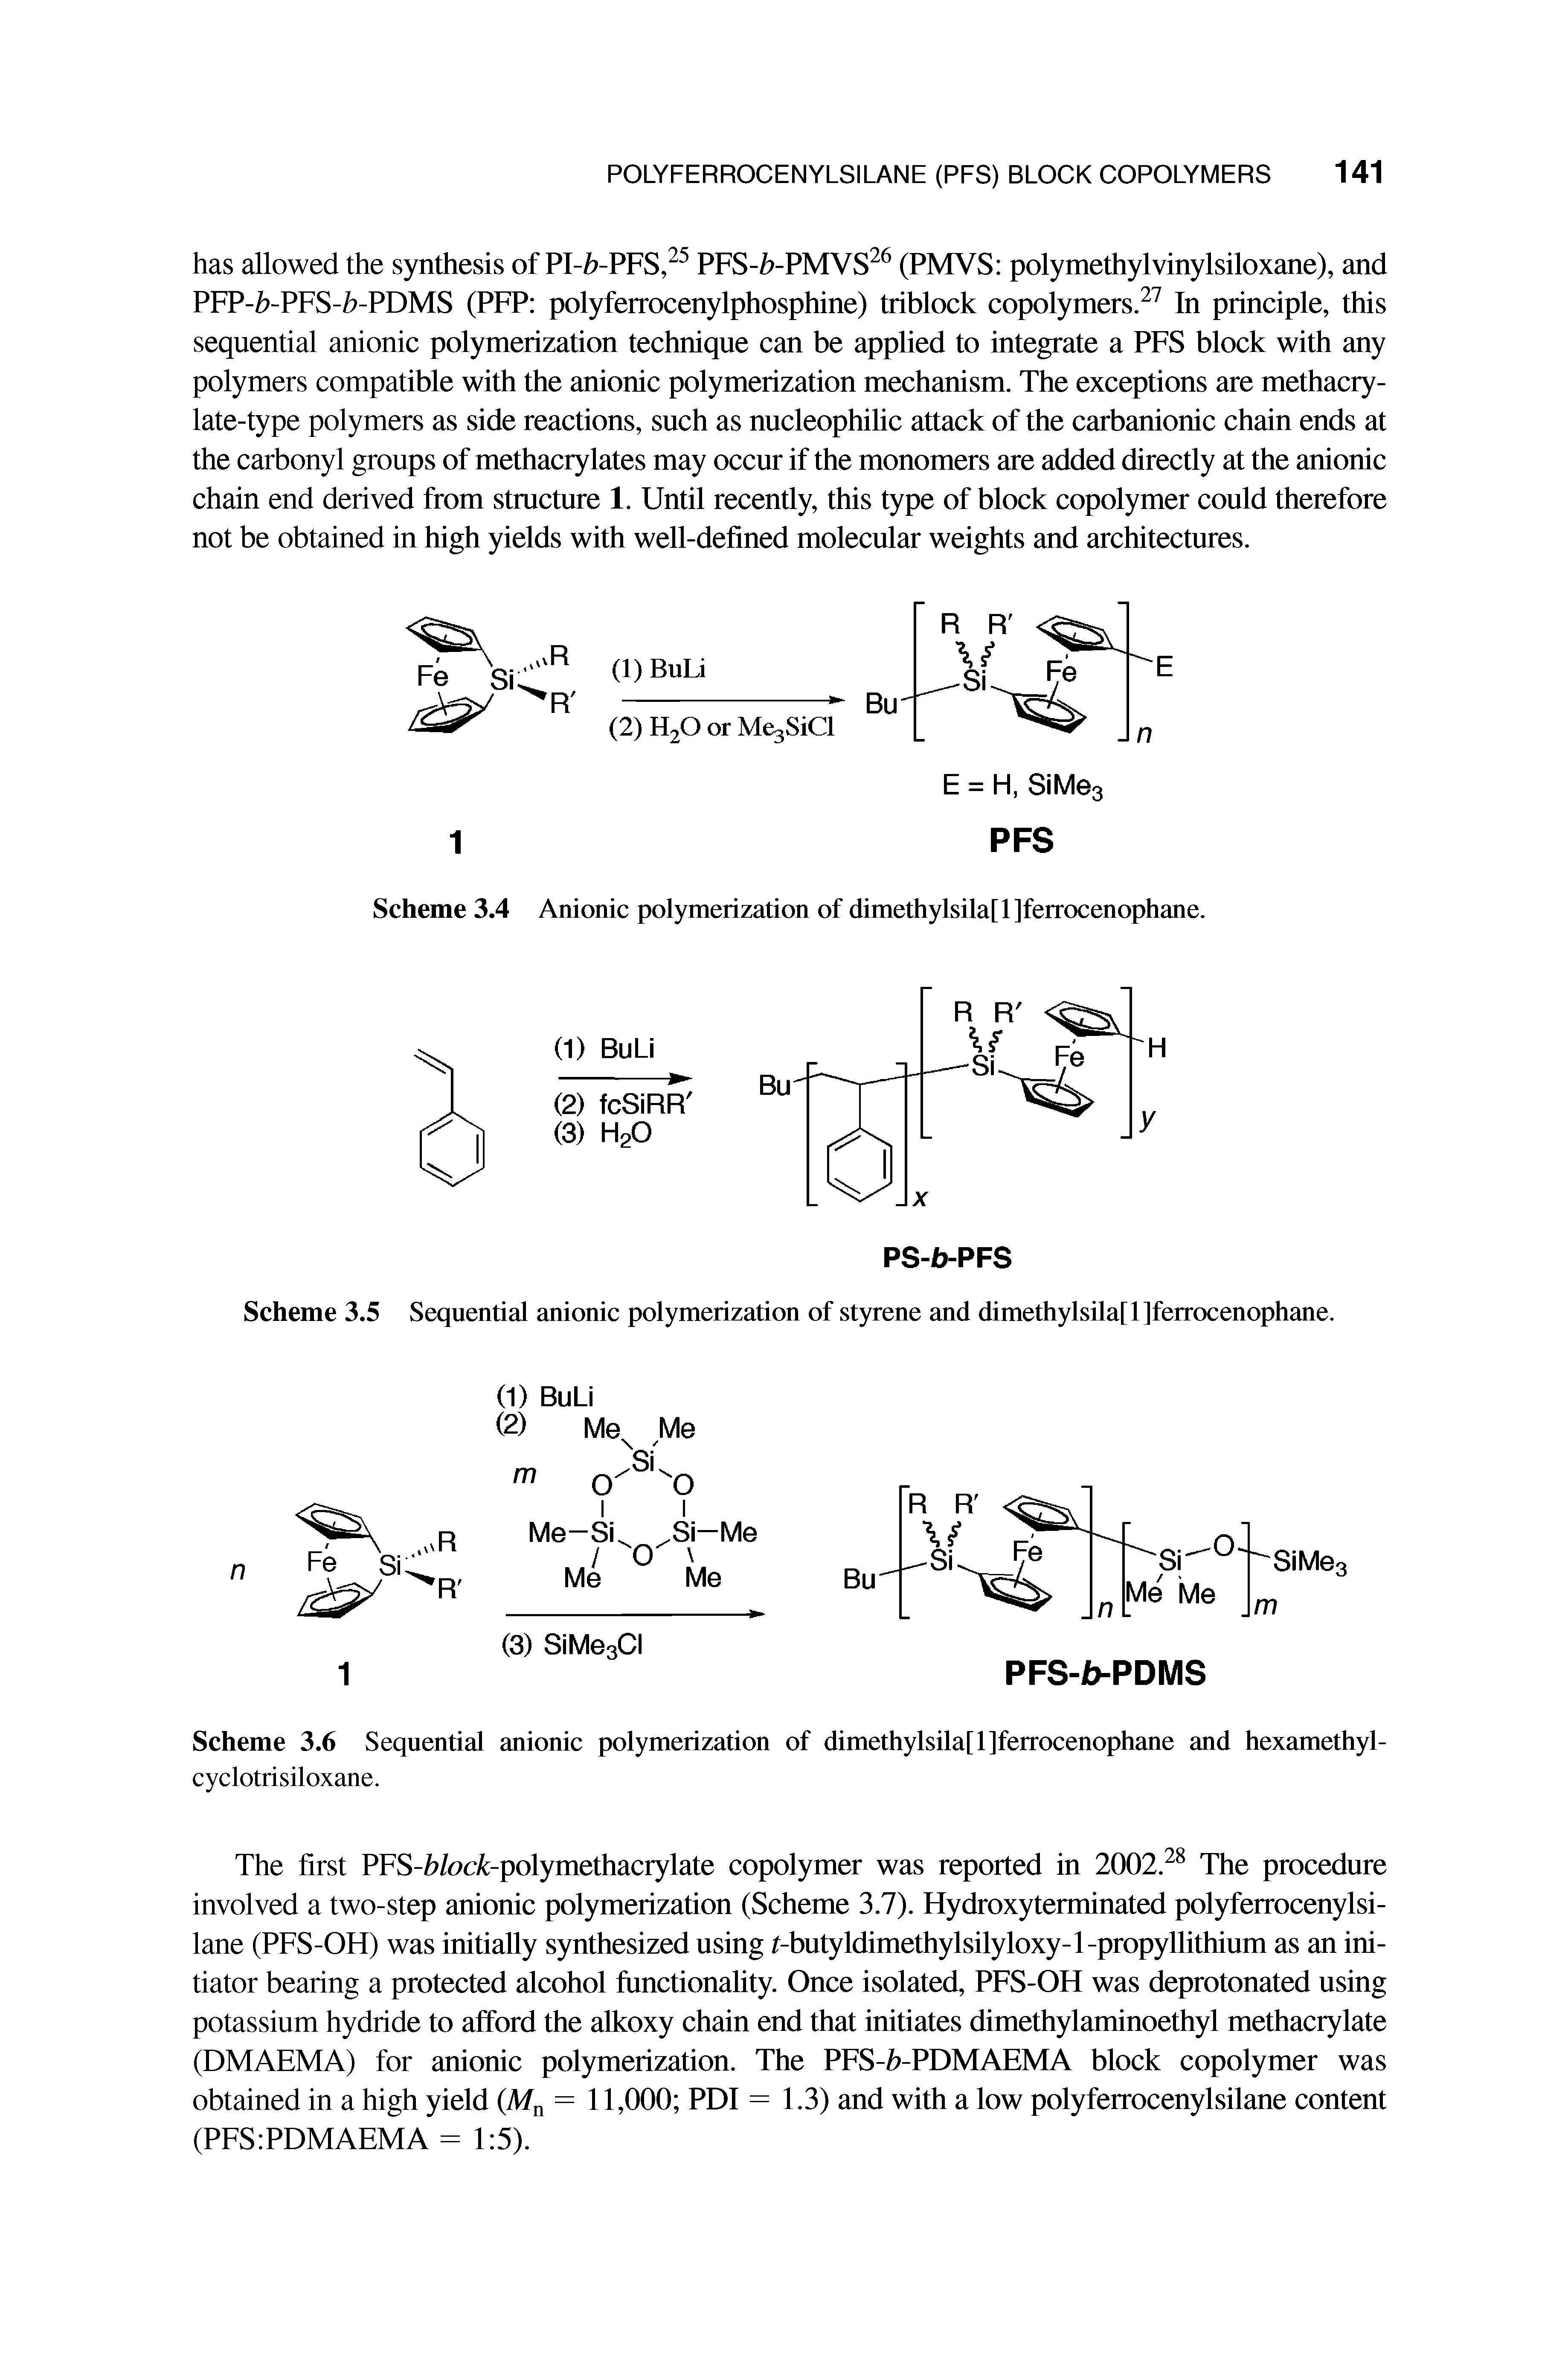 Scheme 3.6 Sequential anionic polymerization of dimethylsila[l]ferrocenophane and hexamethyl-cyclotrisiloxane.